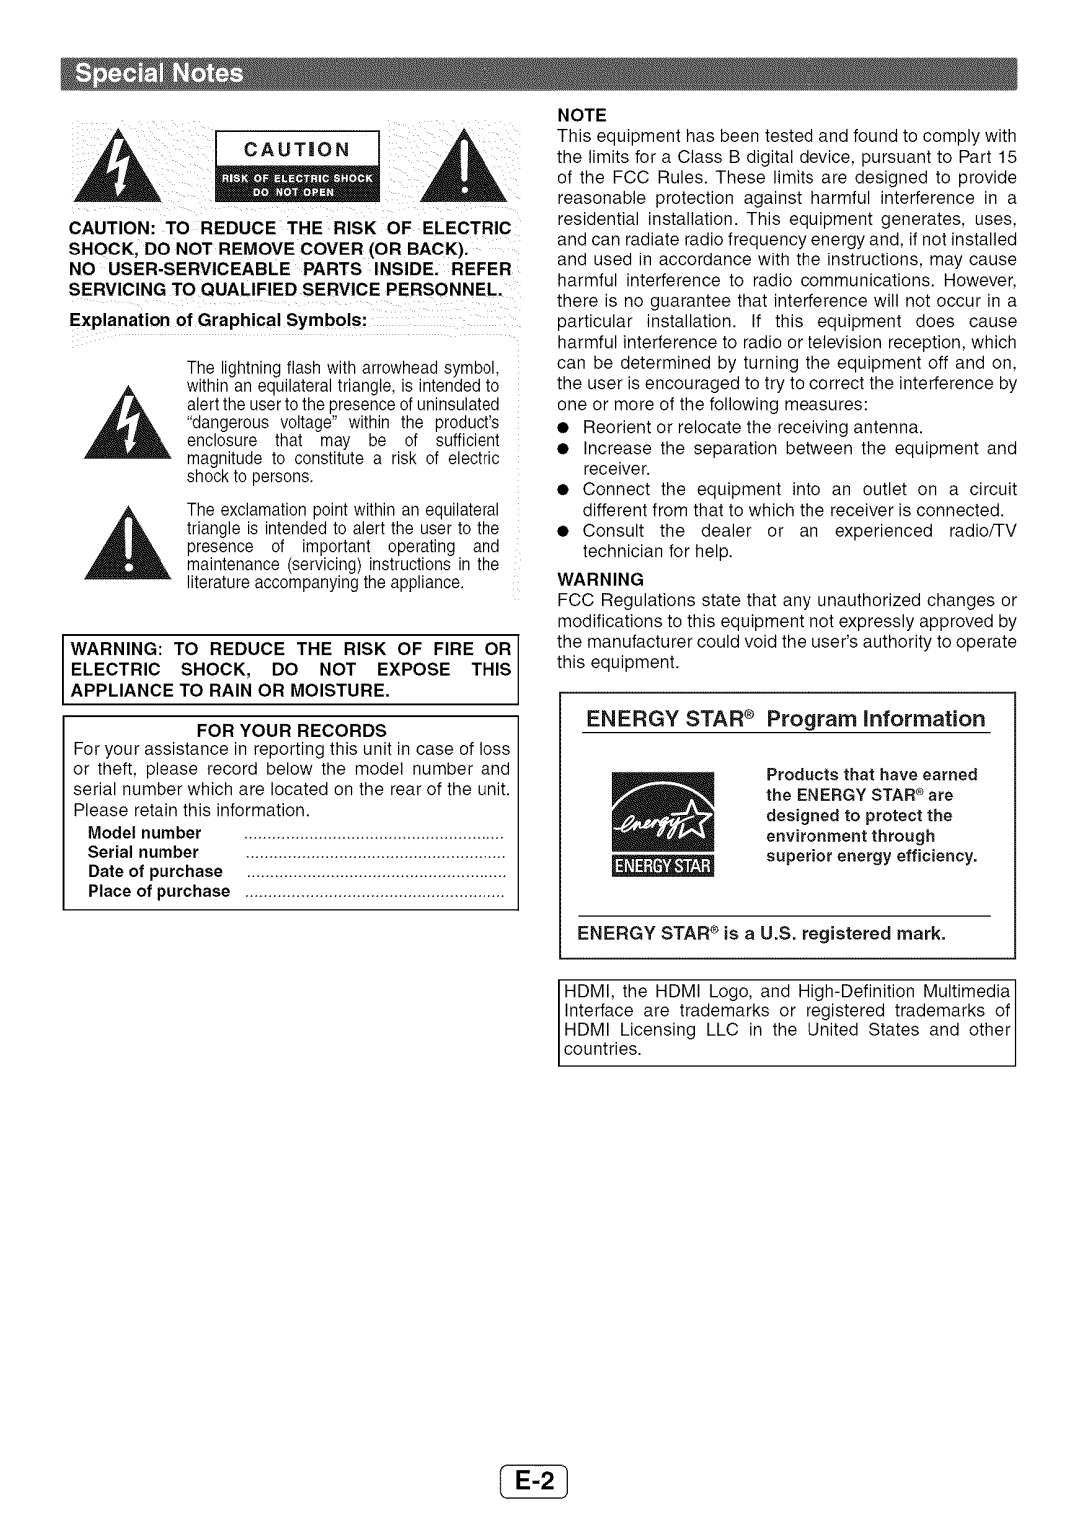 Sharp HT-SL72 operation manual CAUTION lk, ENERGY STAR Program information 